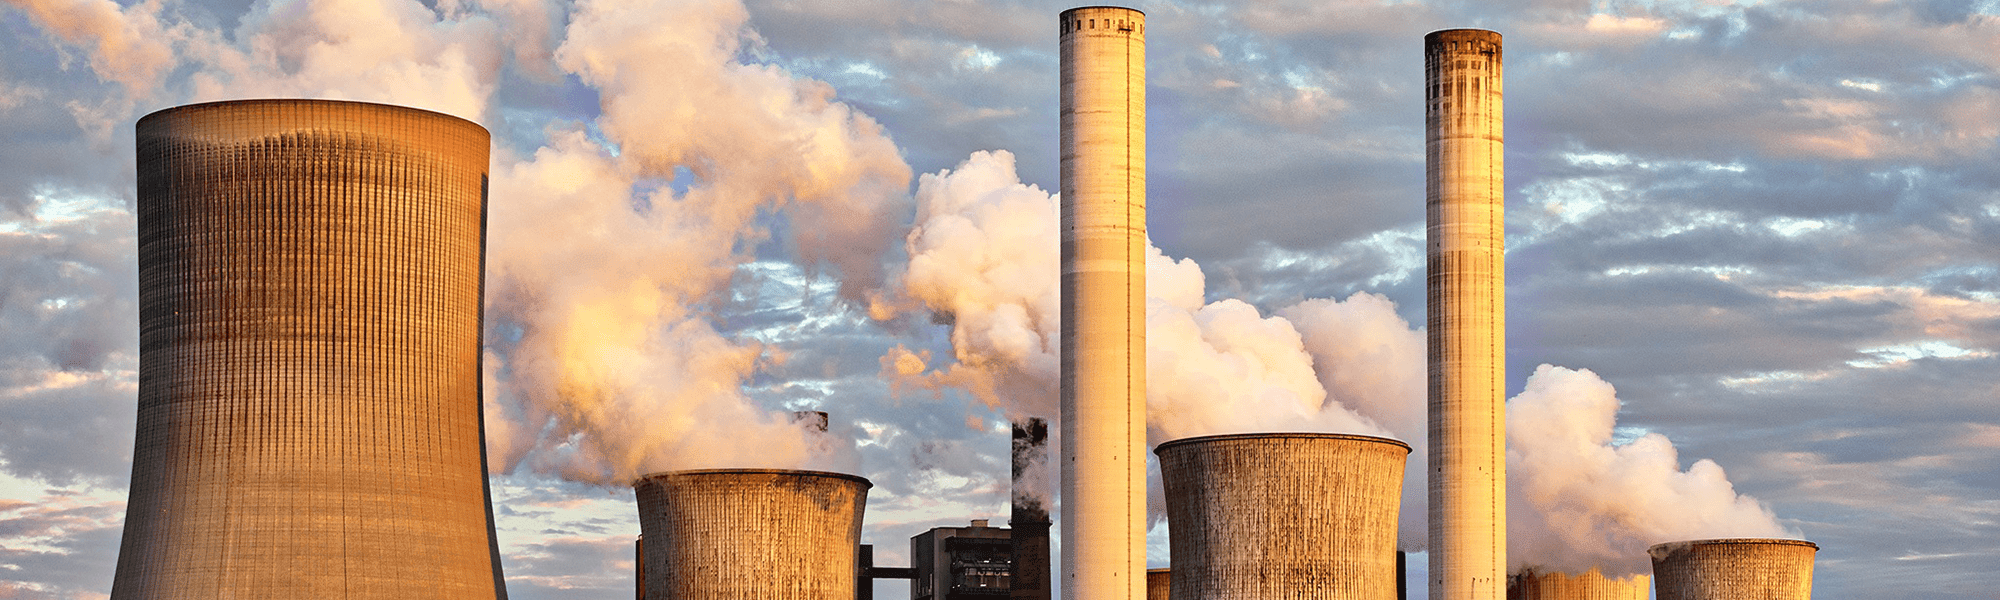 Photograph of Coal Power Plant